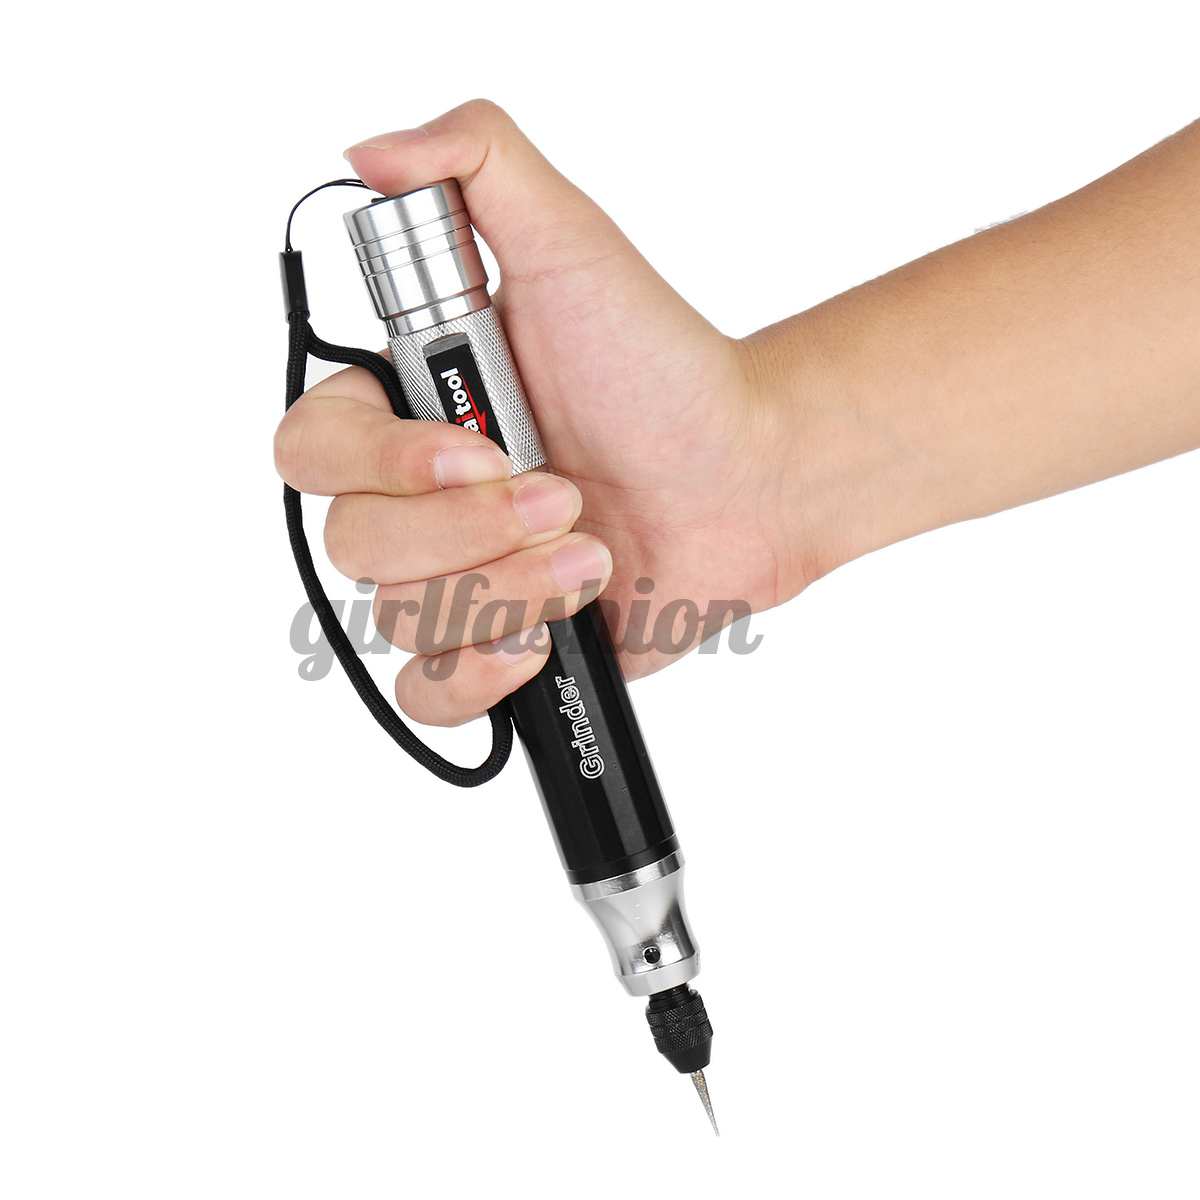 DIY Mini Rotary Electric Engraver Pen Grinder Battery Engraving Pen 6 Drill Bit